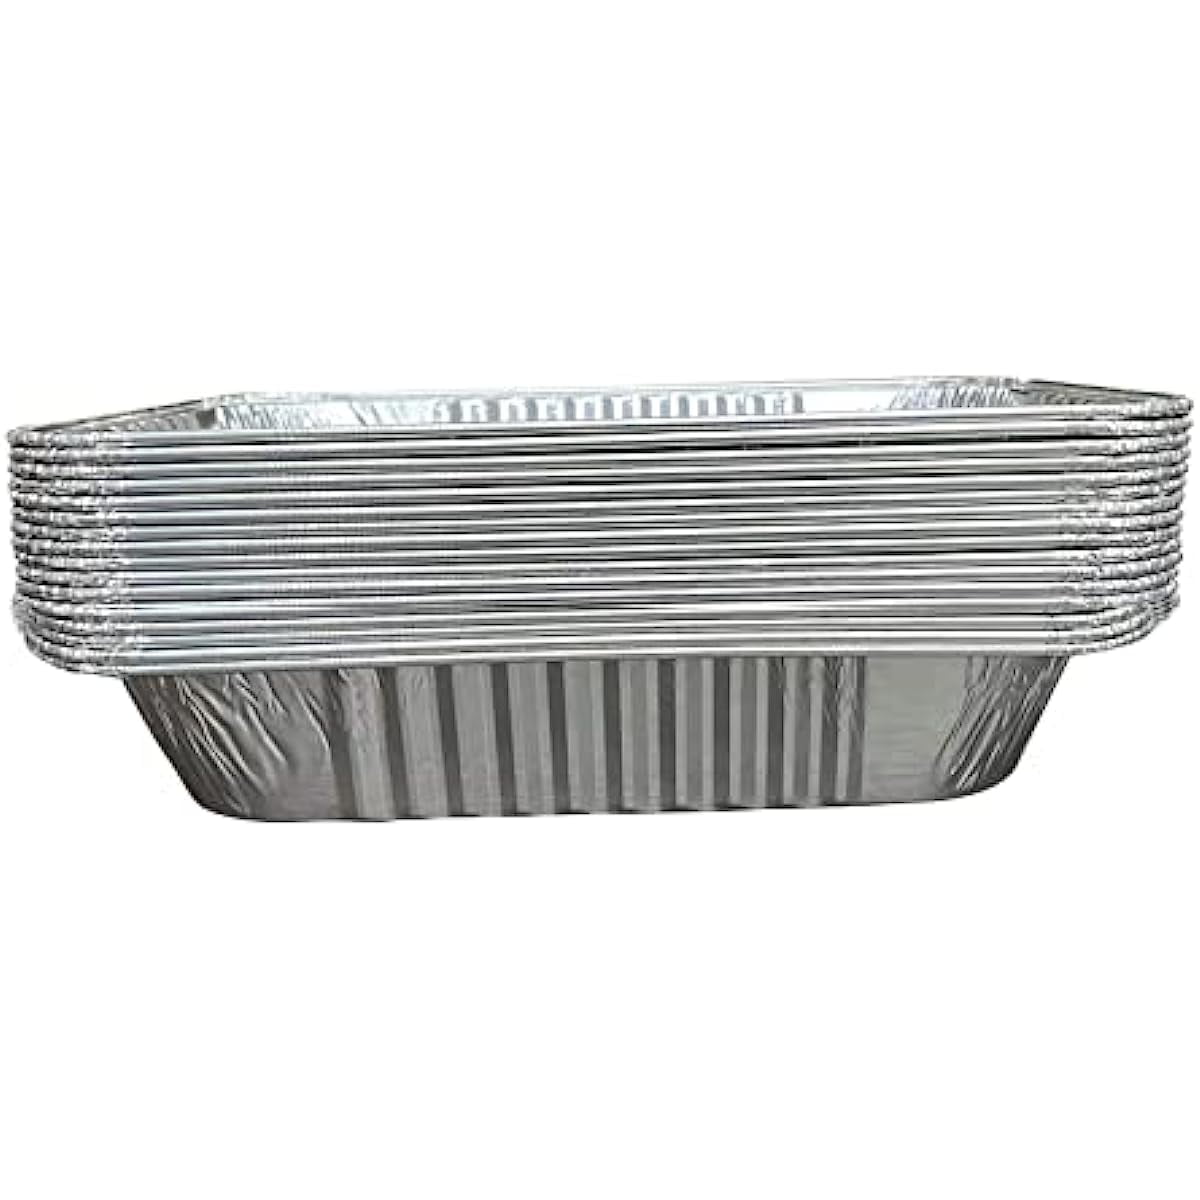 Aluminum Pan Disposable Size 9x13, Aluminum Pan Disposable Aluminum Foil Pan  Preparation, Baking, Food, Storage, Heating, Cooking, Chef, Catering,  Crayfish Tray 